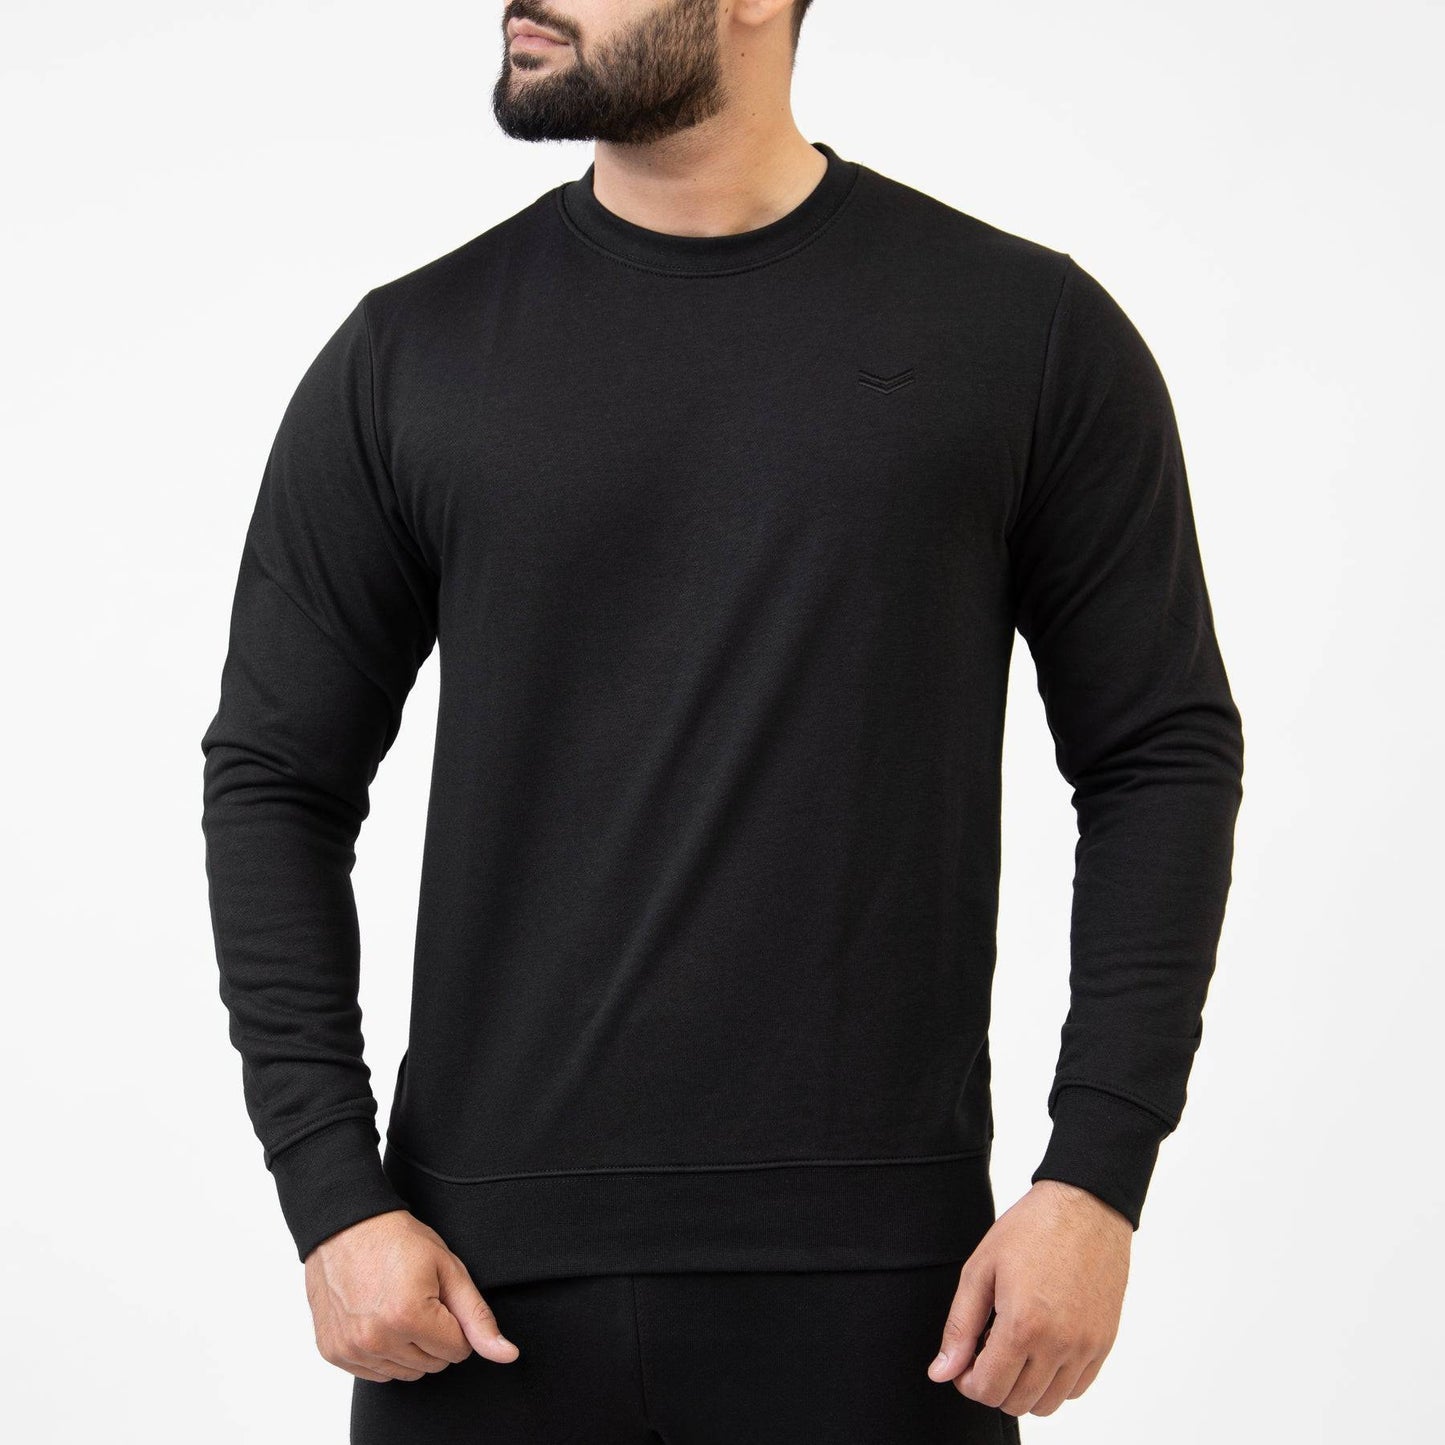 Pitch Black Sweatshirt - Valetica Sports